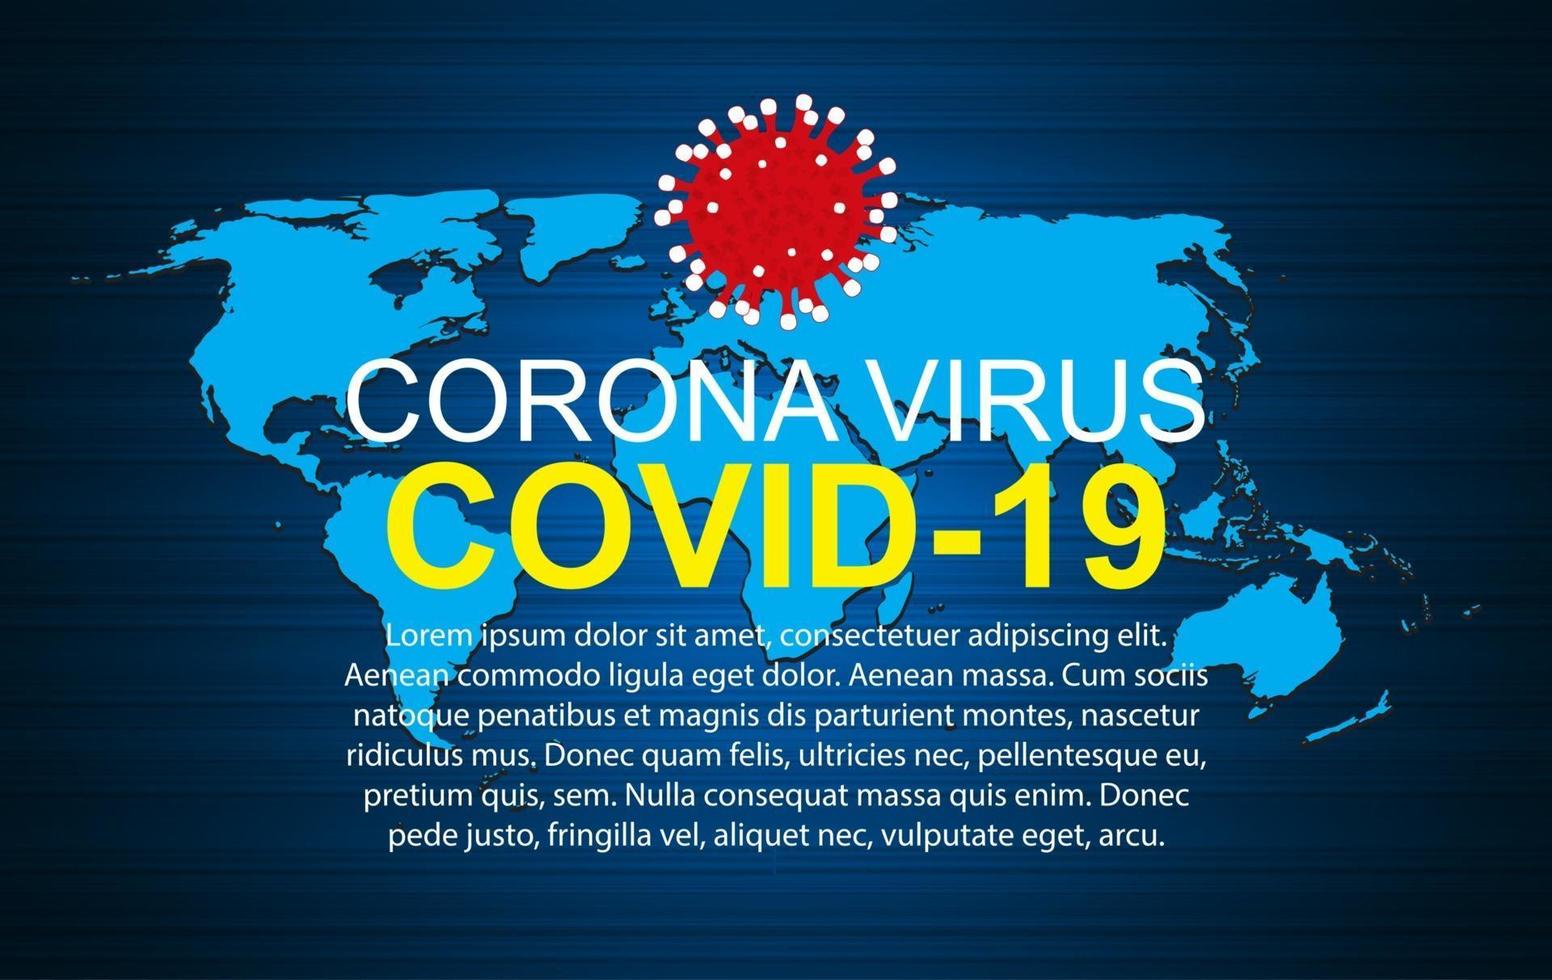 Health Medical Corona Virus Covid 19 Background with World Map. Vector Illustration